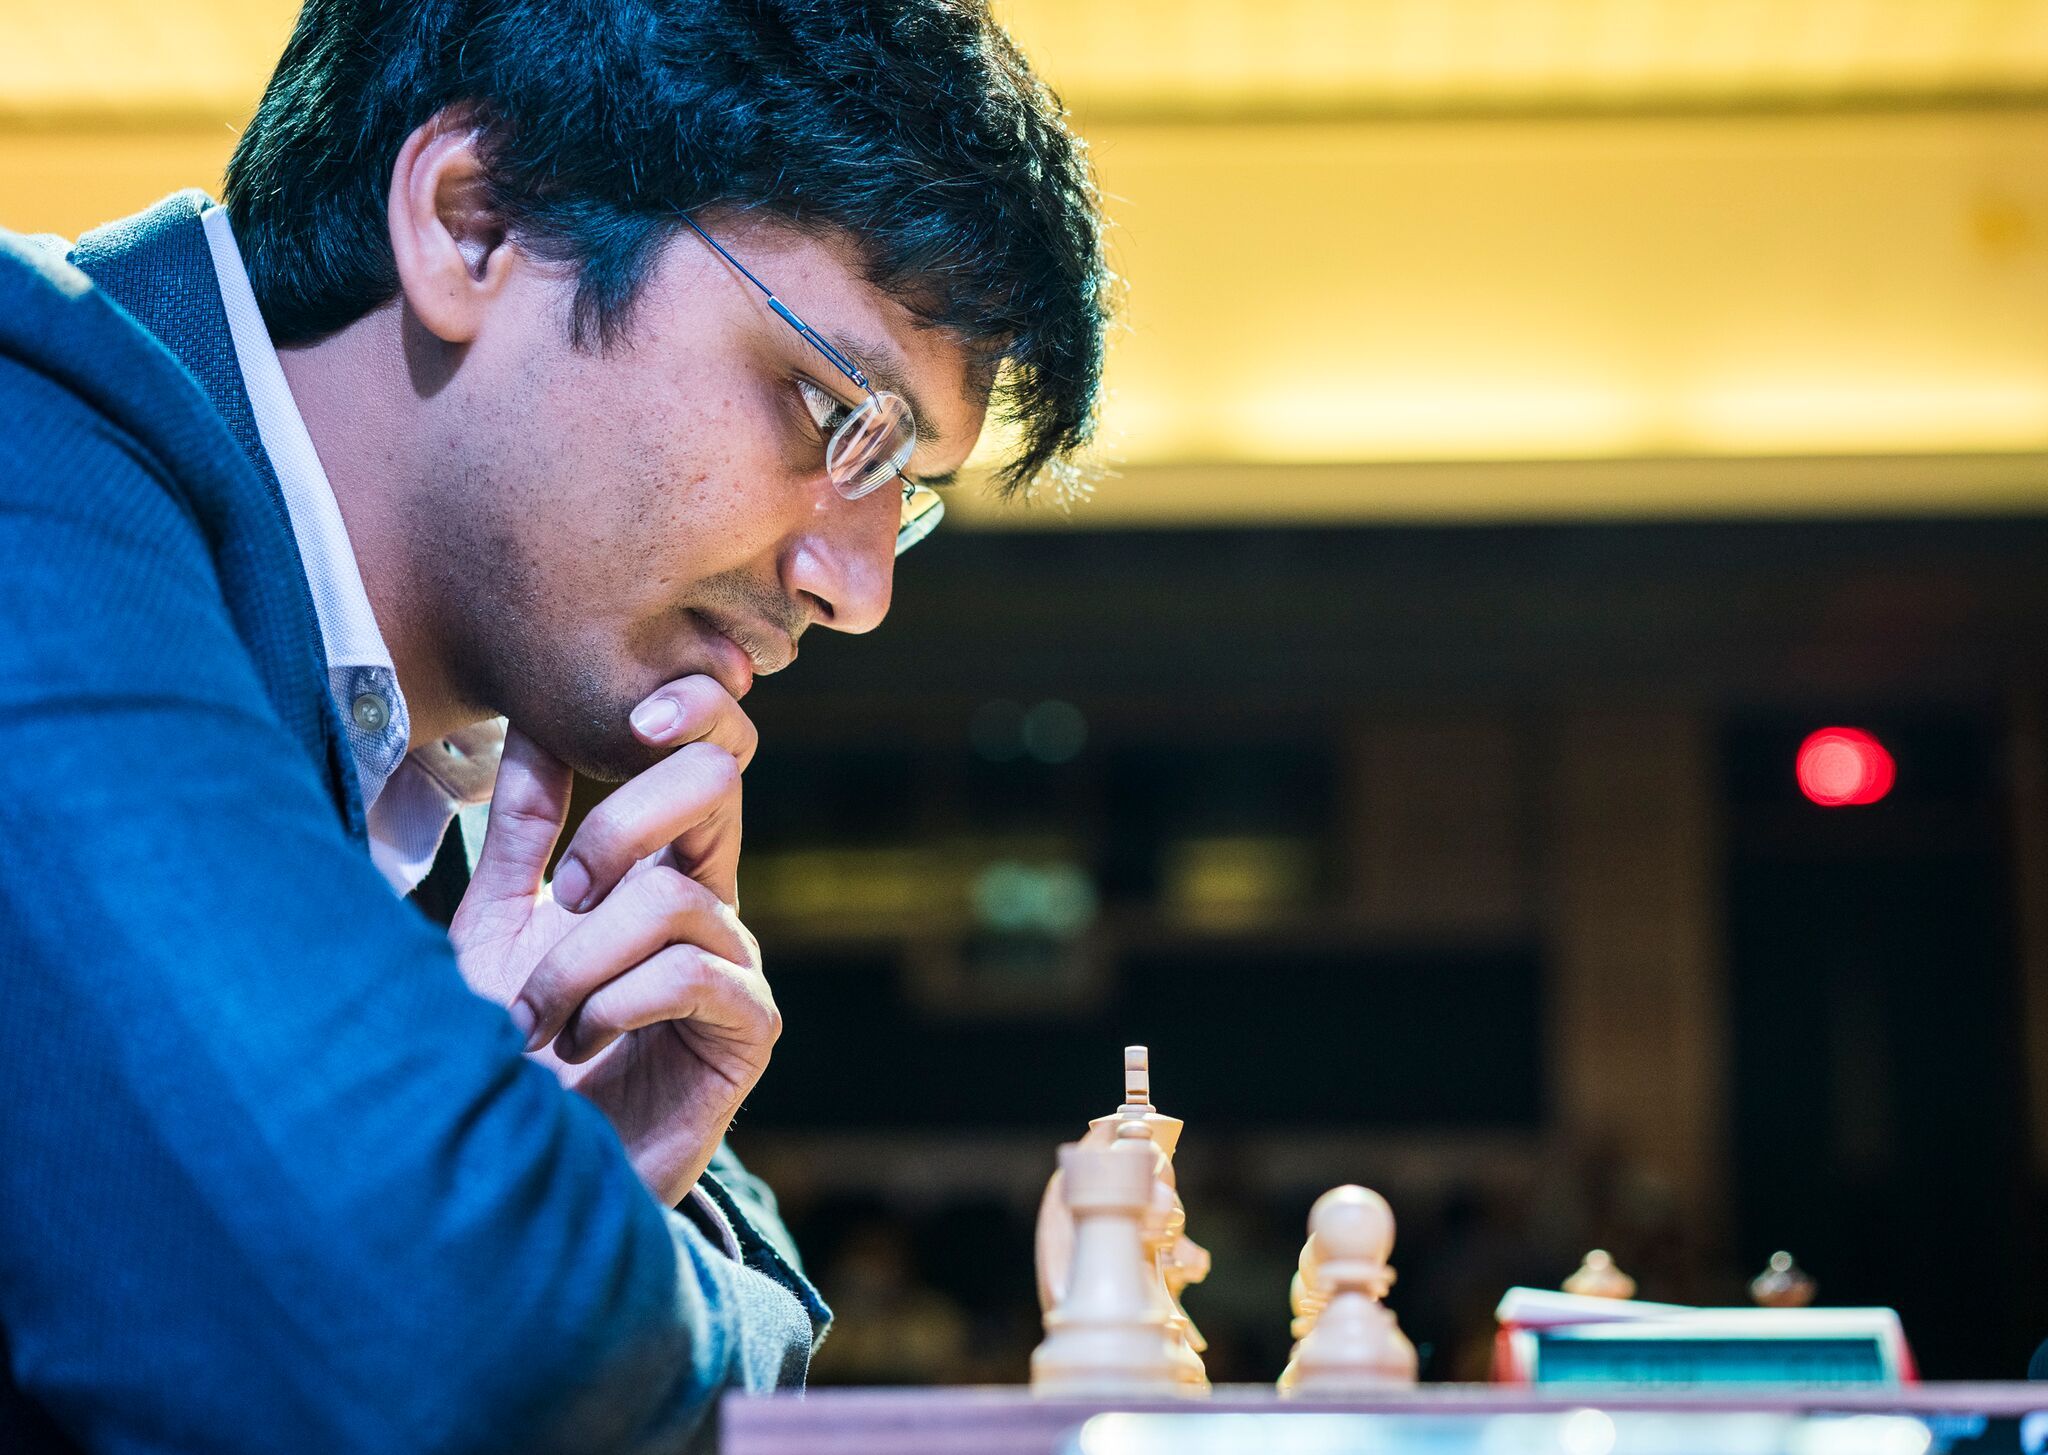 Star Players Kick Off Tata Steel Chess India 